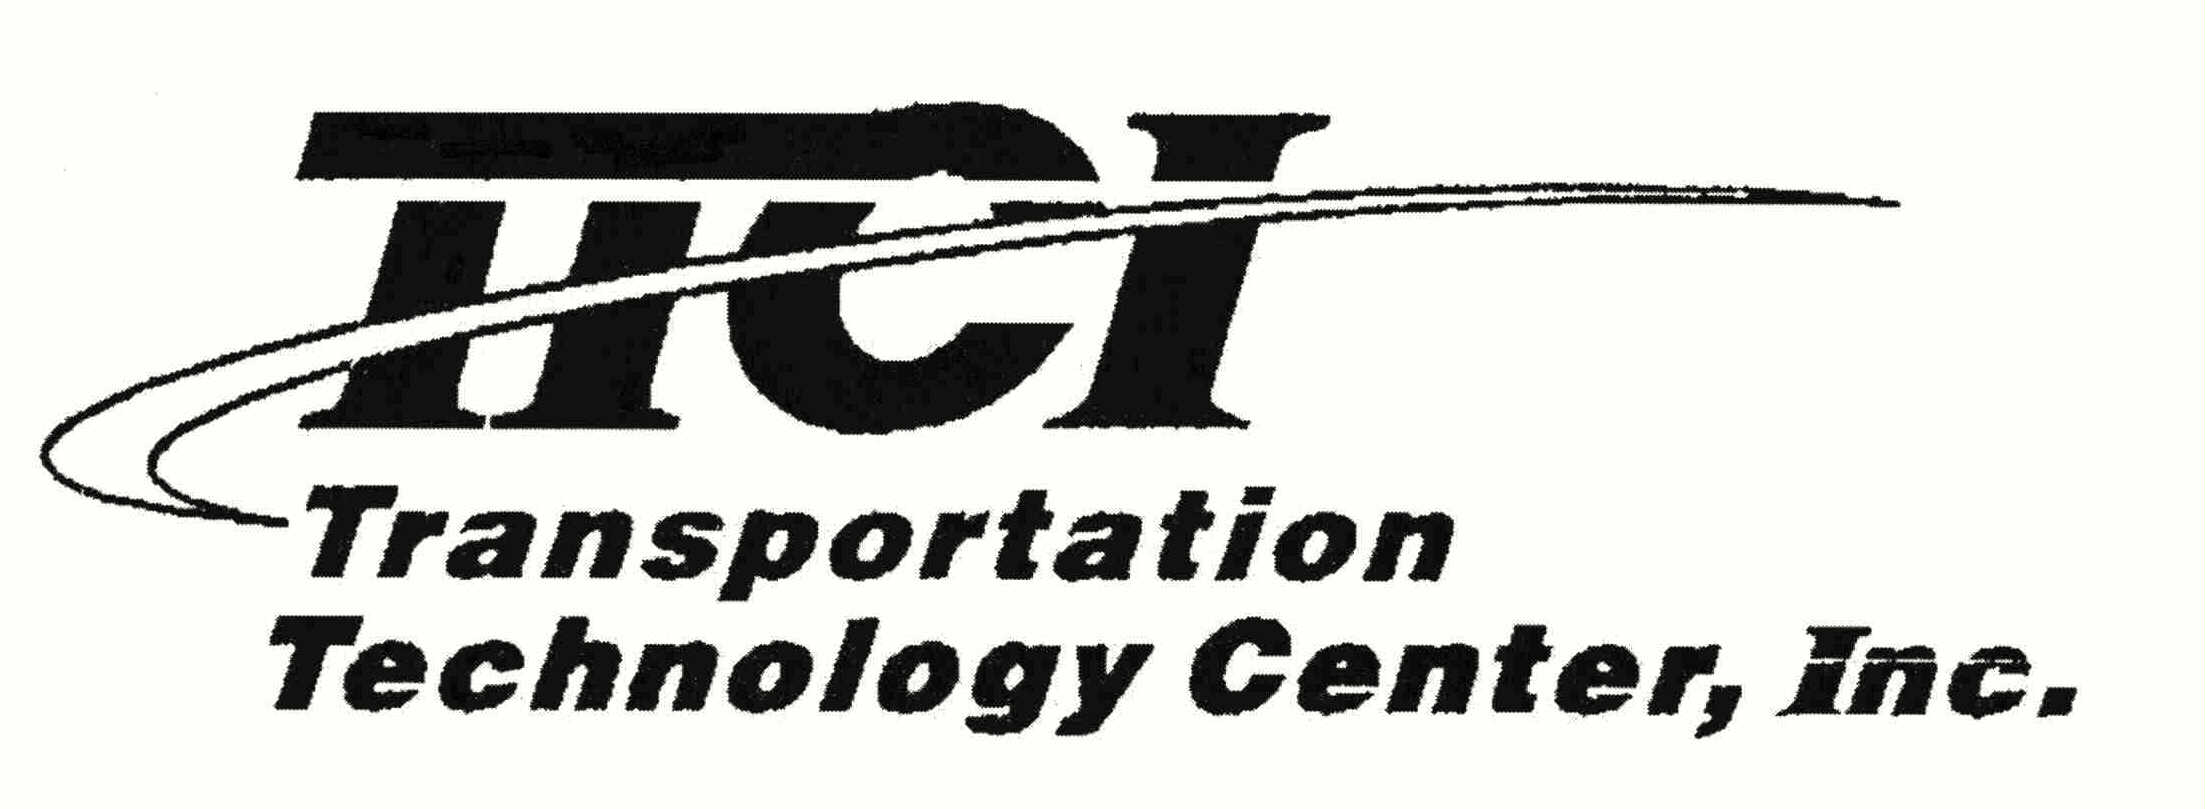  TTCI TRANSPORTATION TECHNOLOGY CENTER, INC.